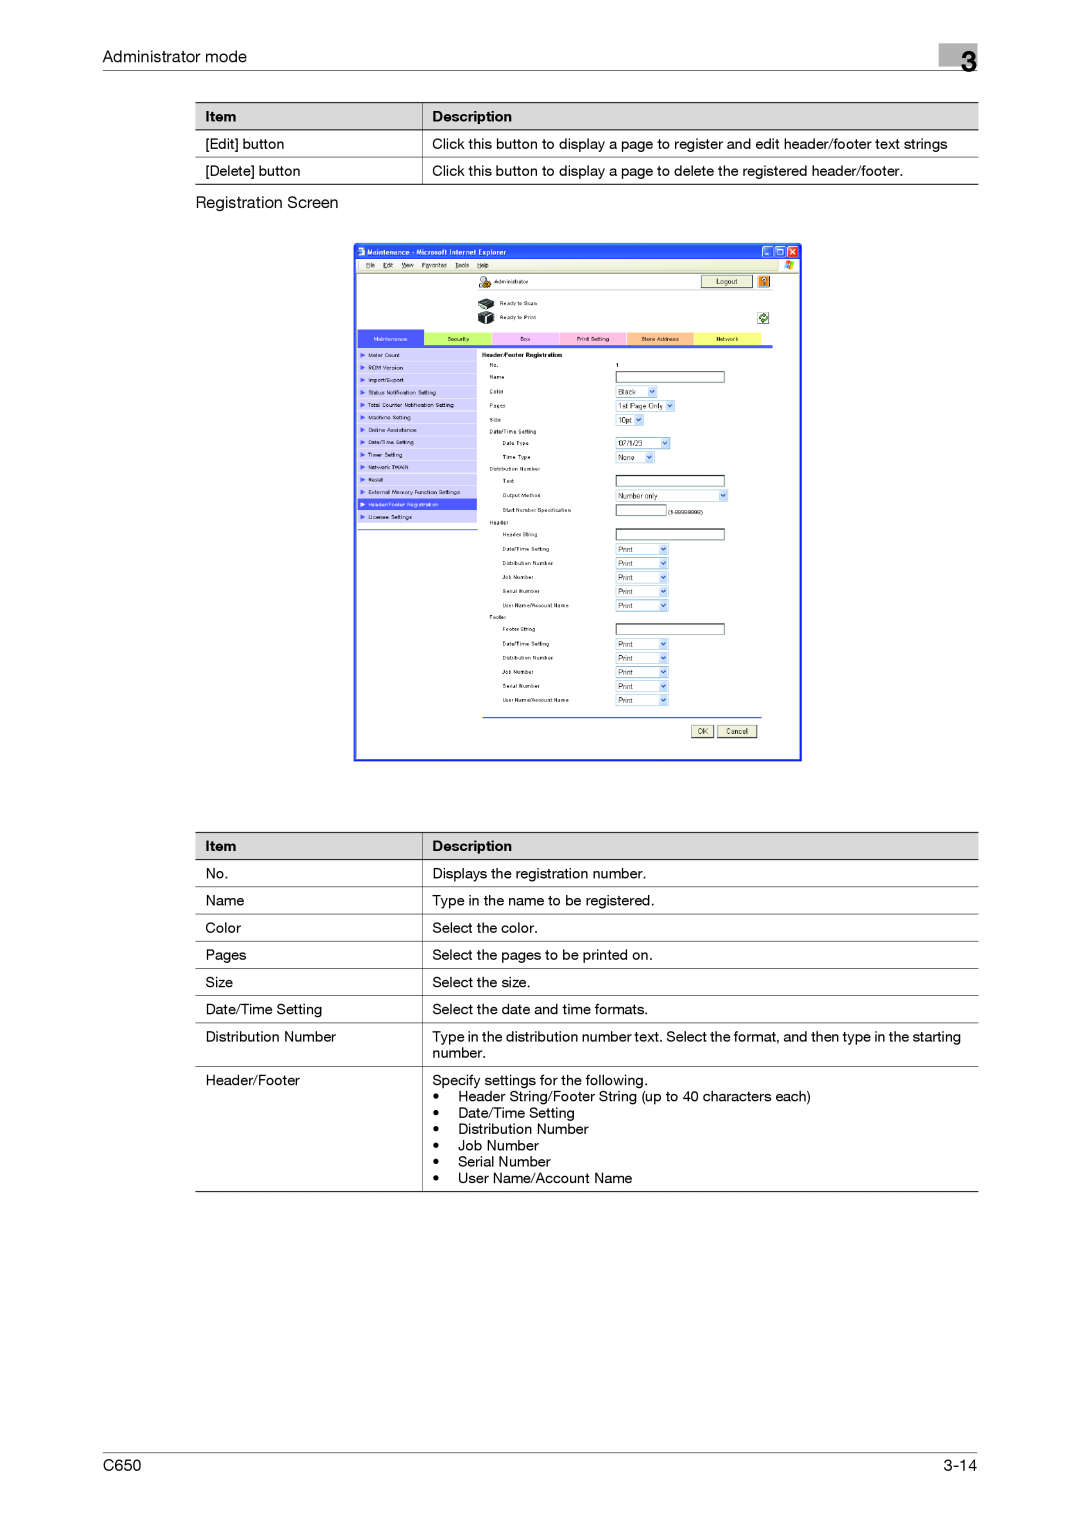 Konica Minolta C650 manual Registration Screen, 3-14, Administrator mode 